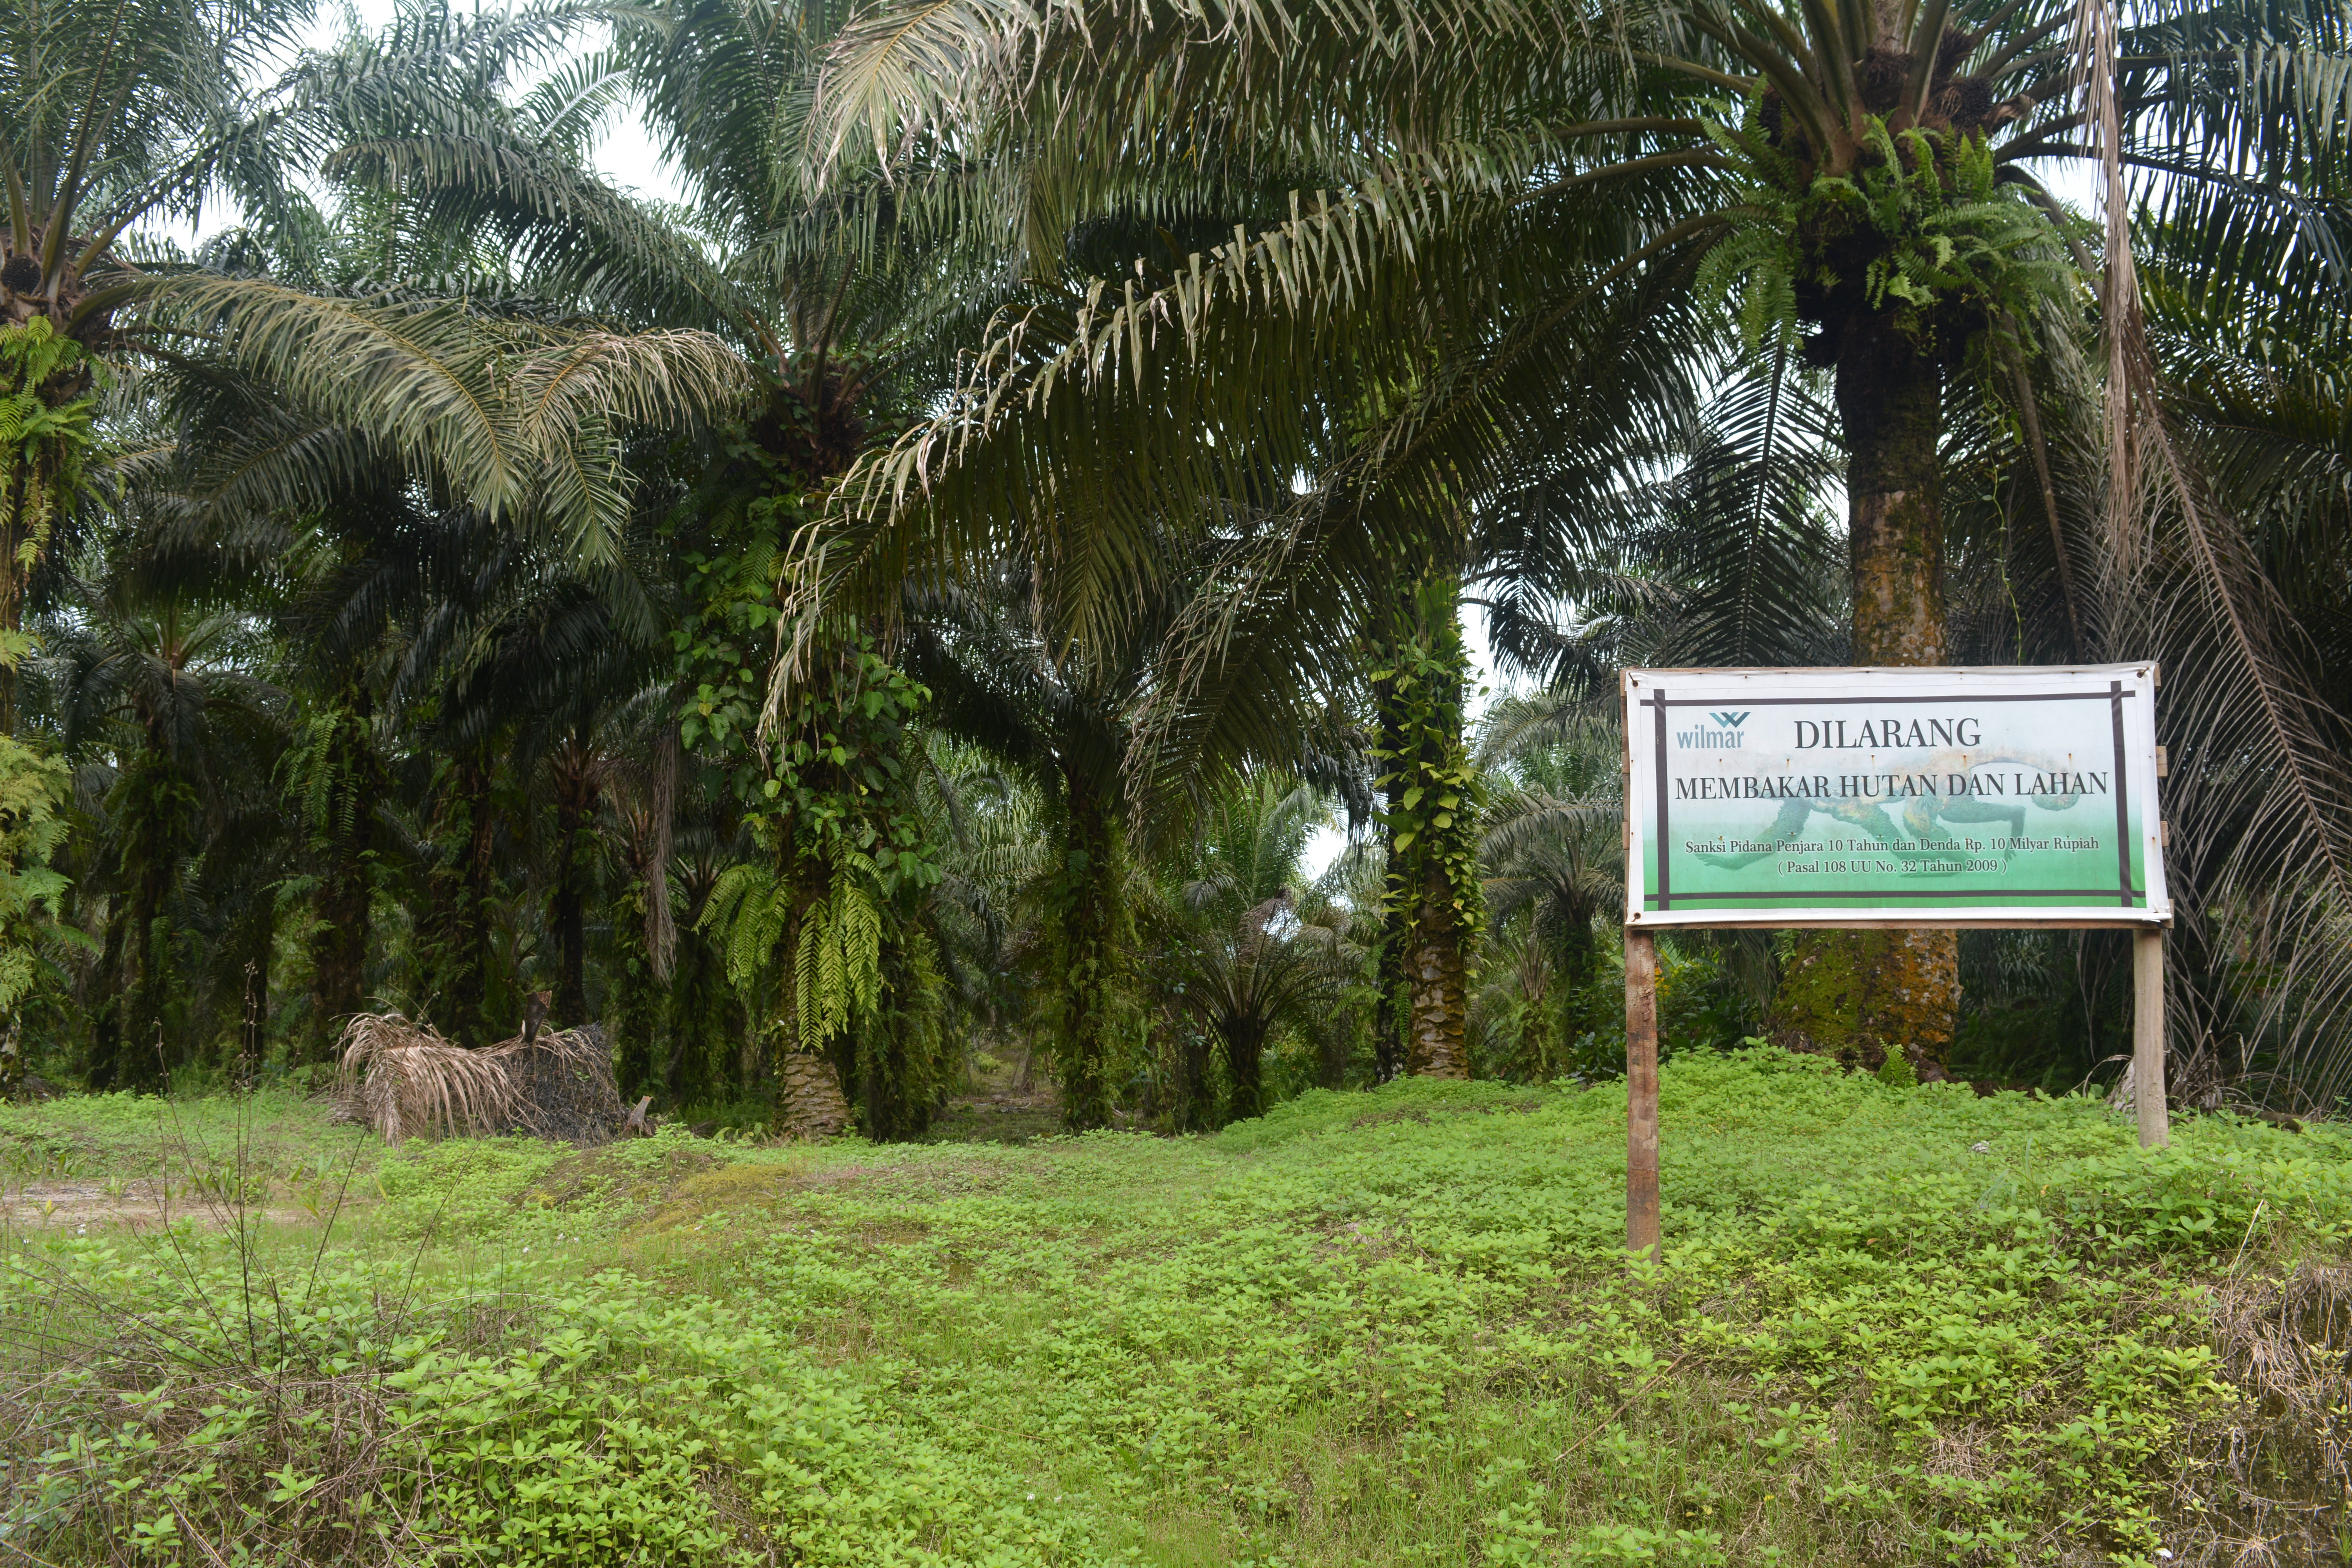 the palm oil plantation near Semanga